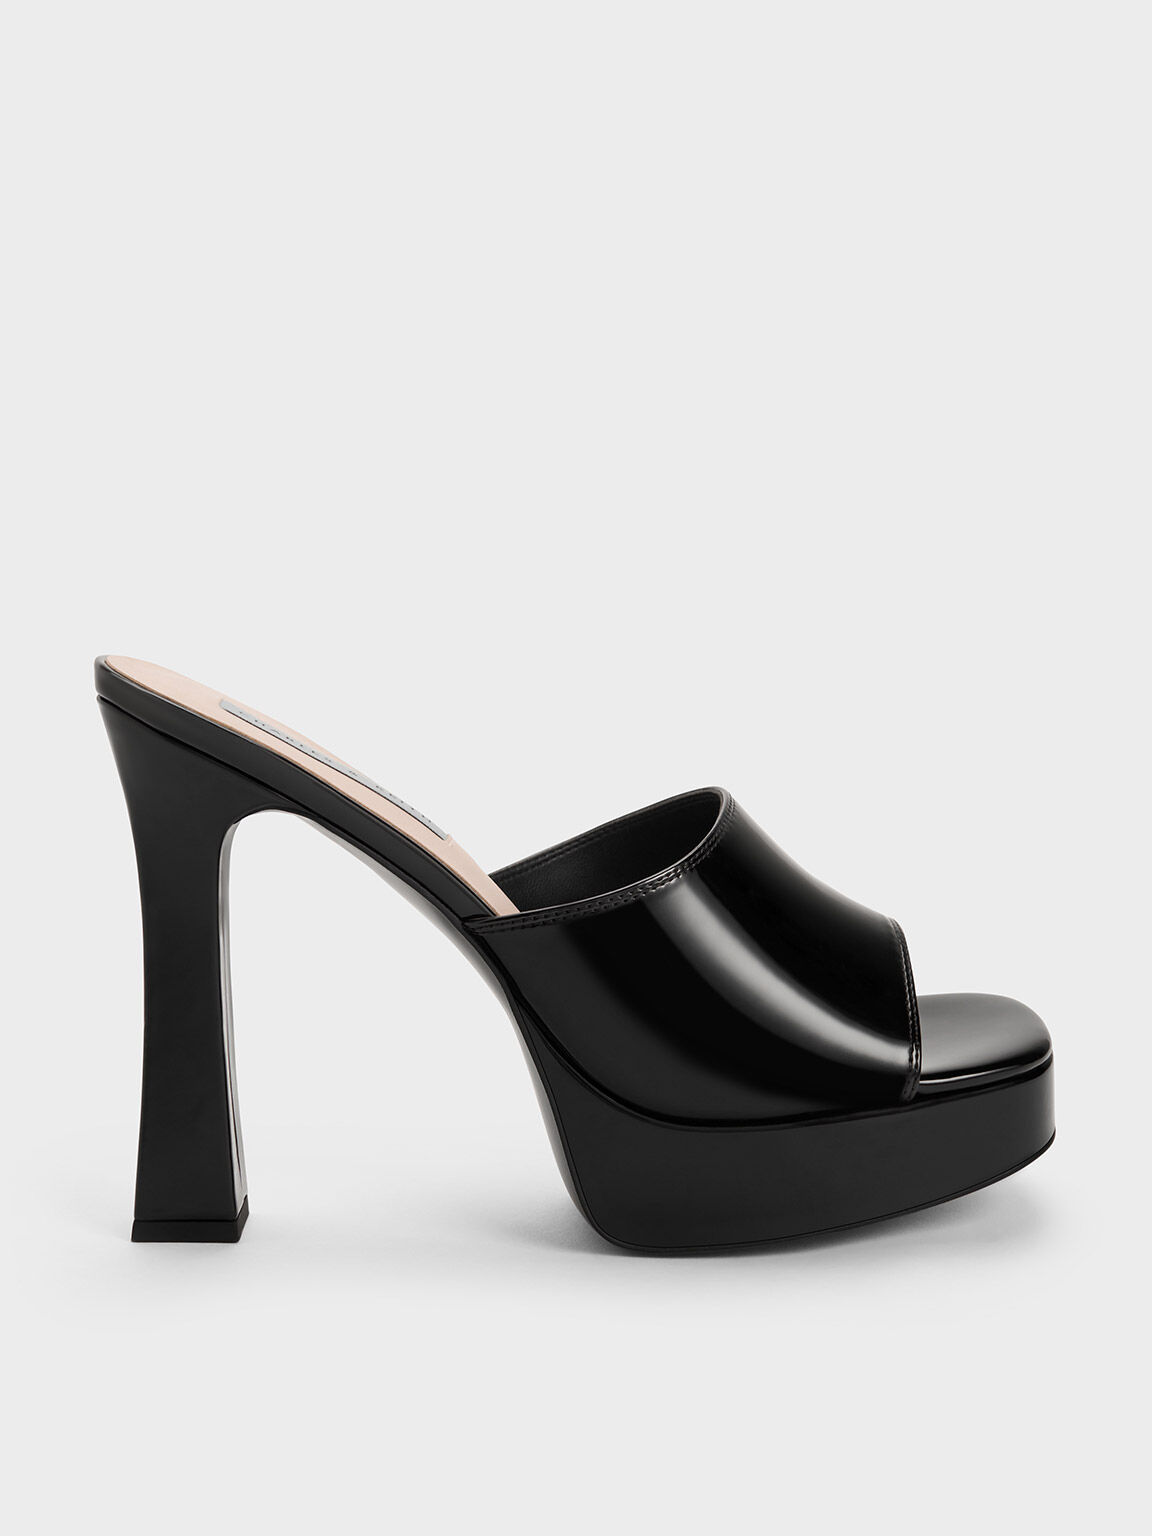 Zolly W Black Suede Heels by Ziera | Shop Online at Ziera NZ